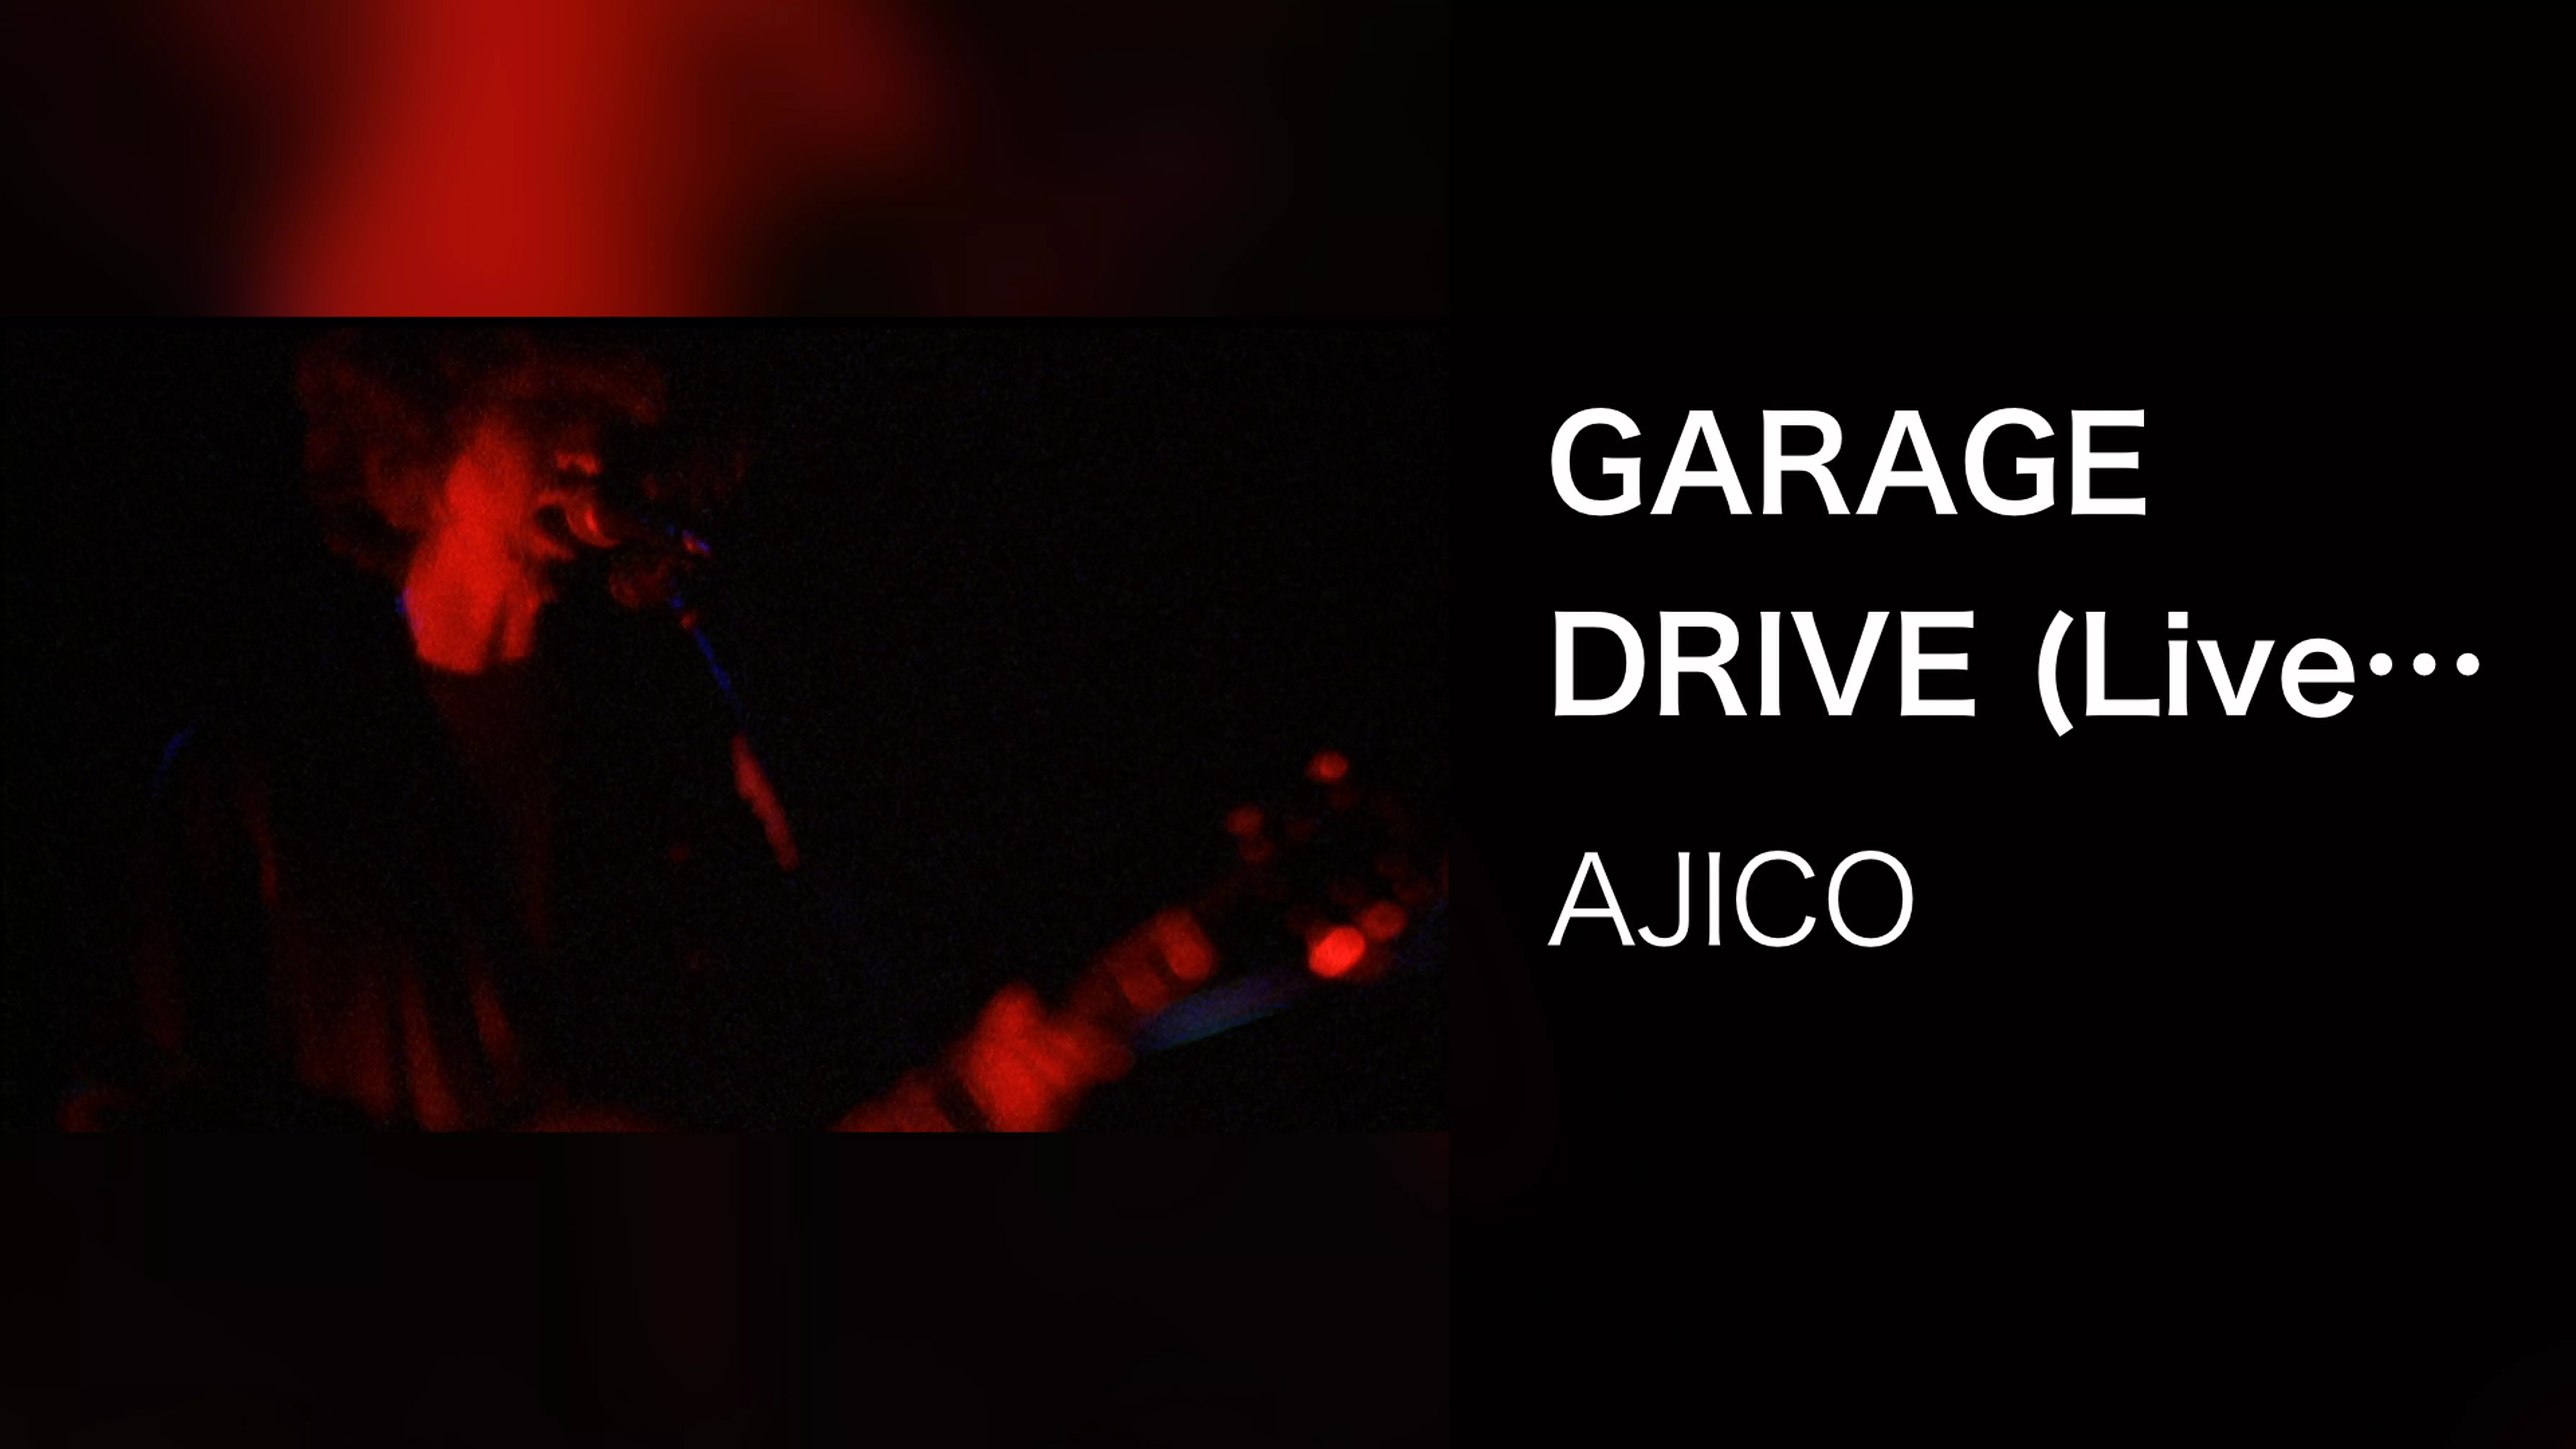 GARAGE DRIVE (Live from AJICO SHOW)